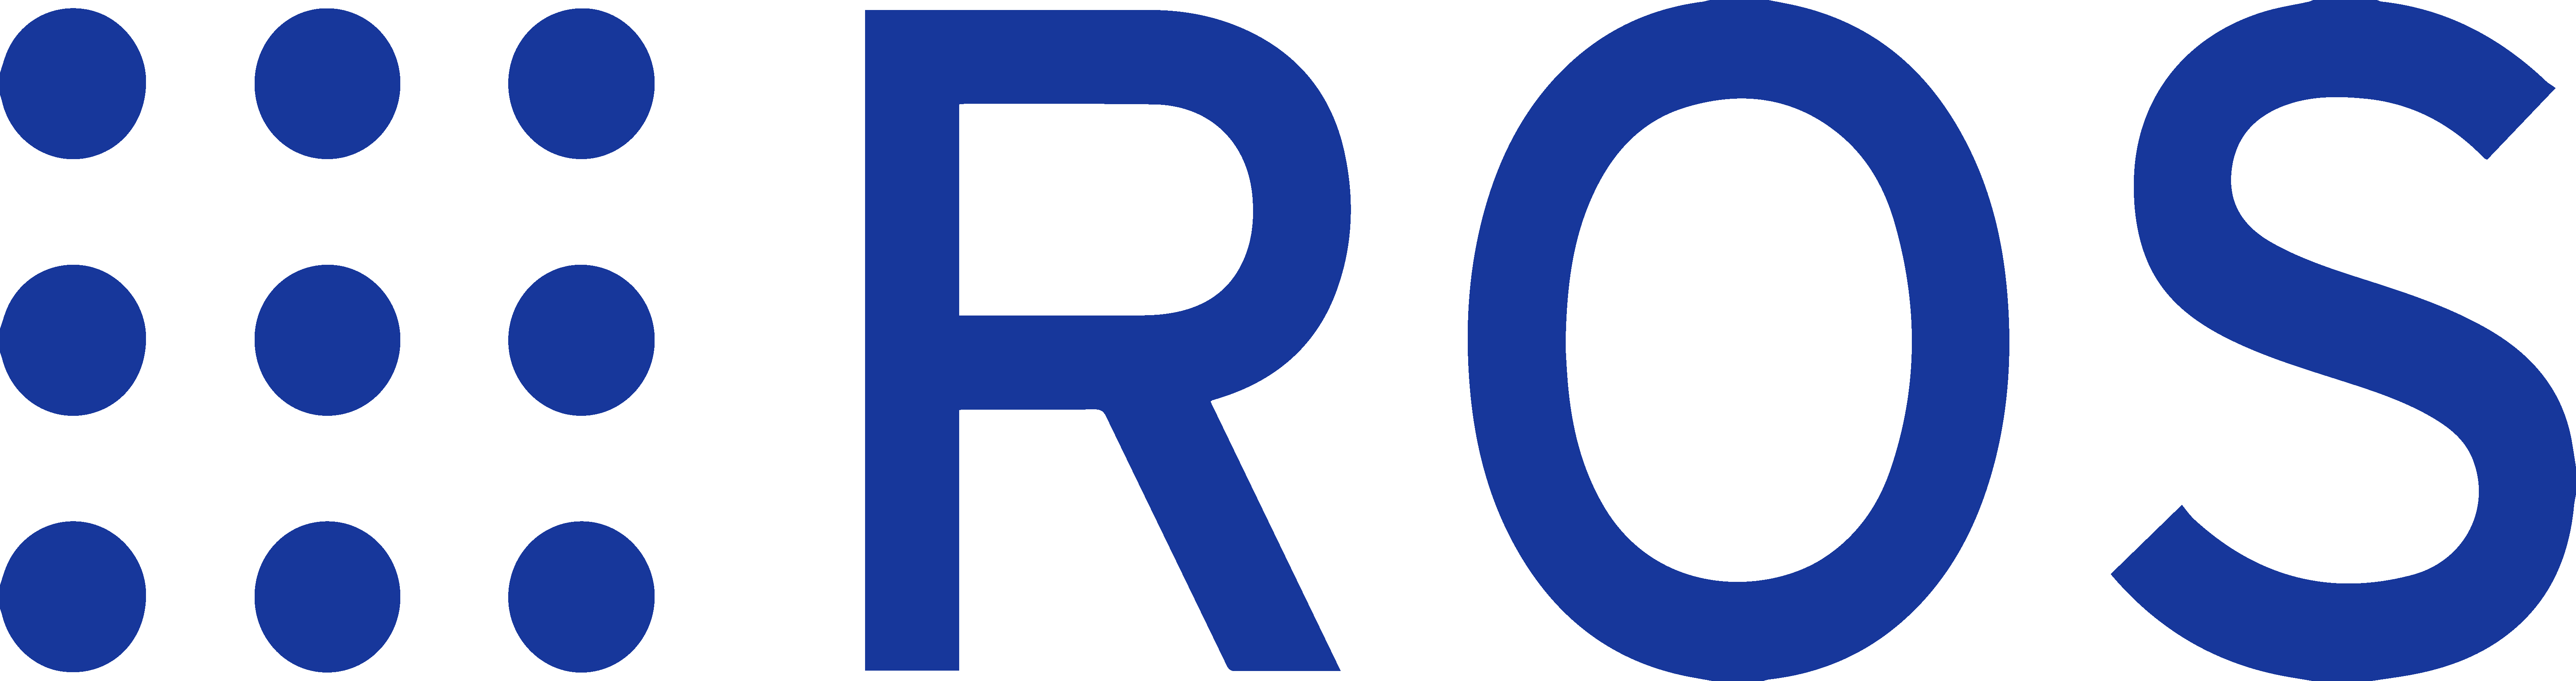 ros_logo